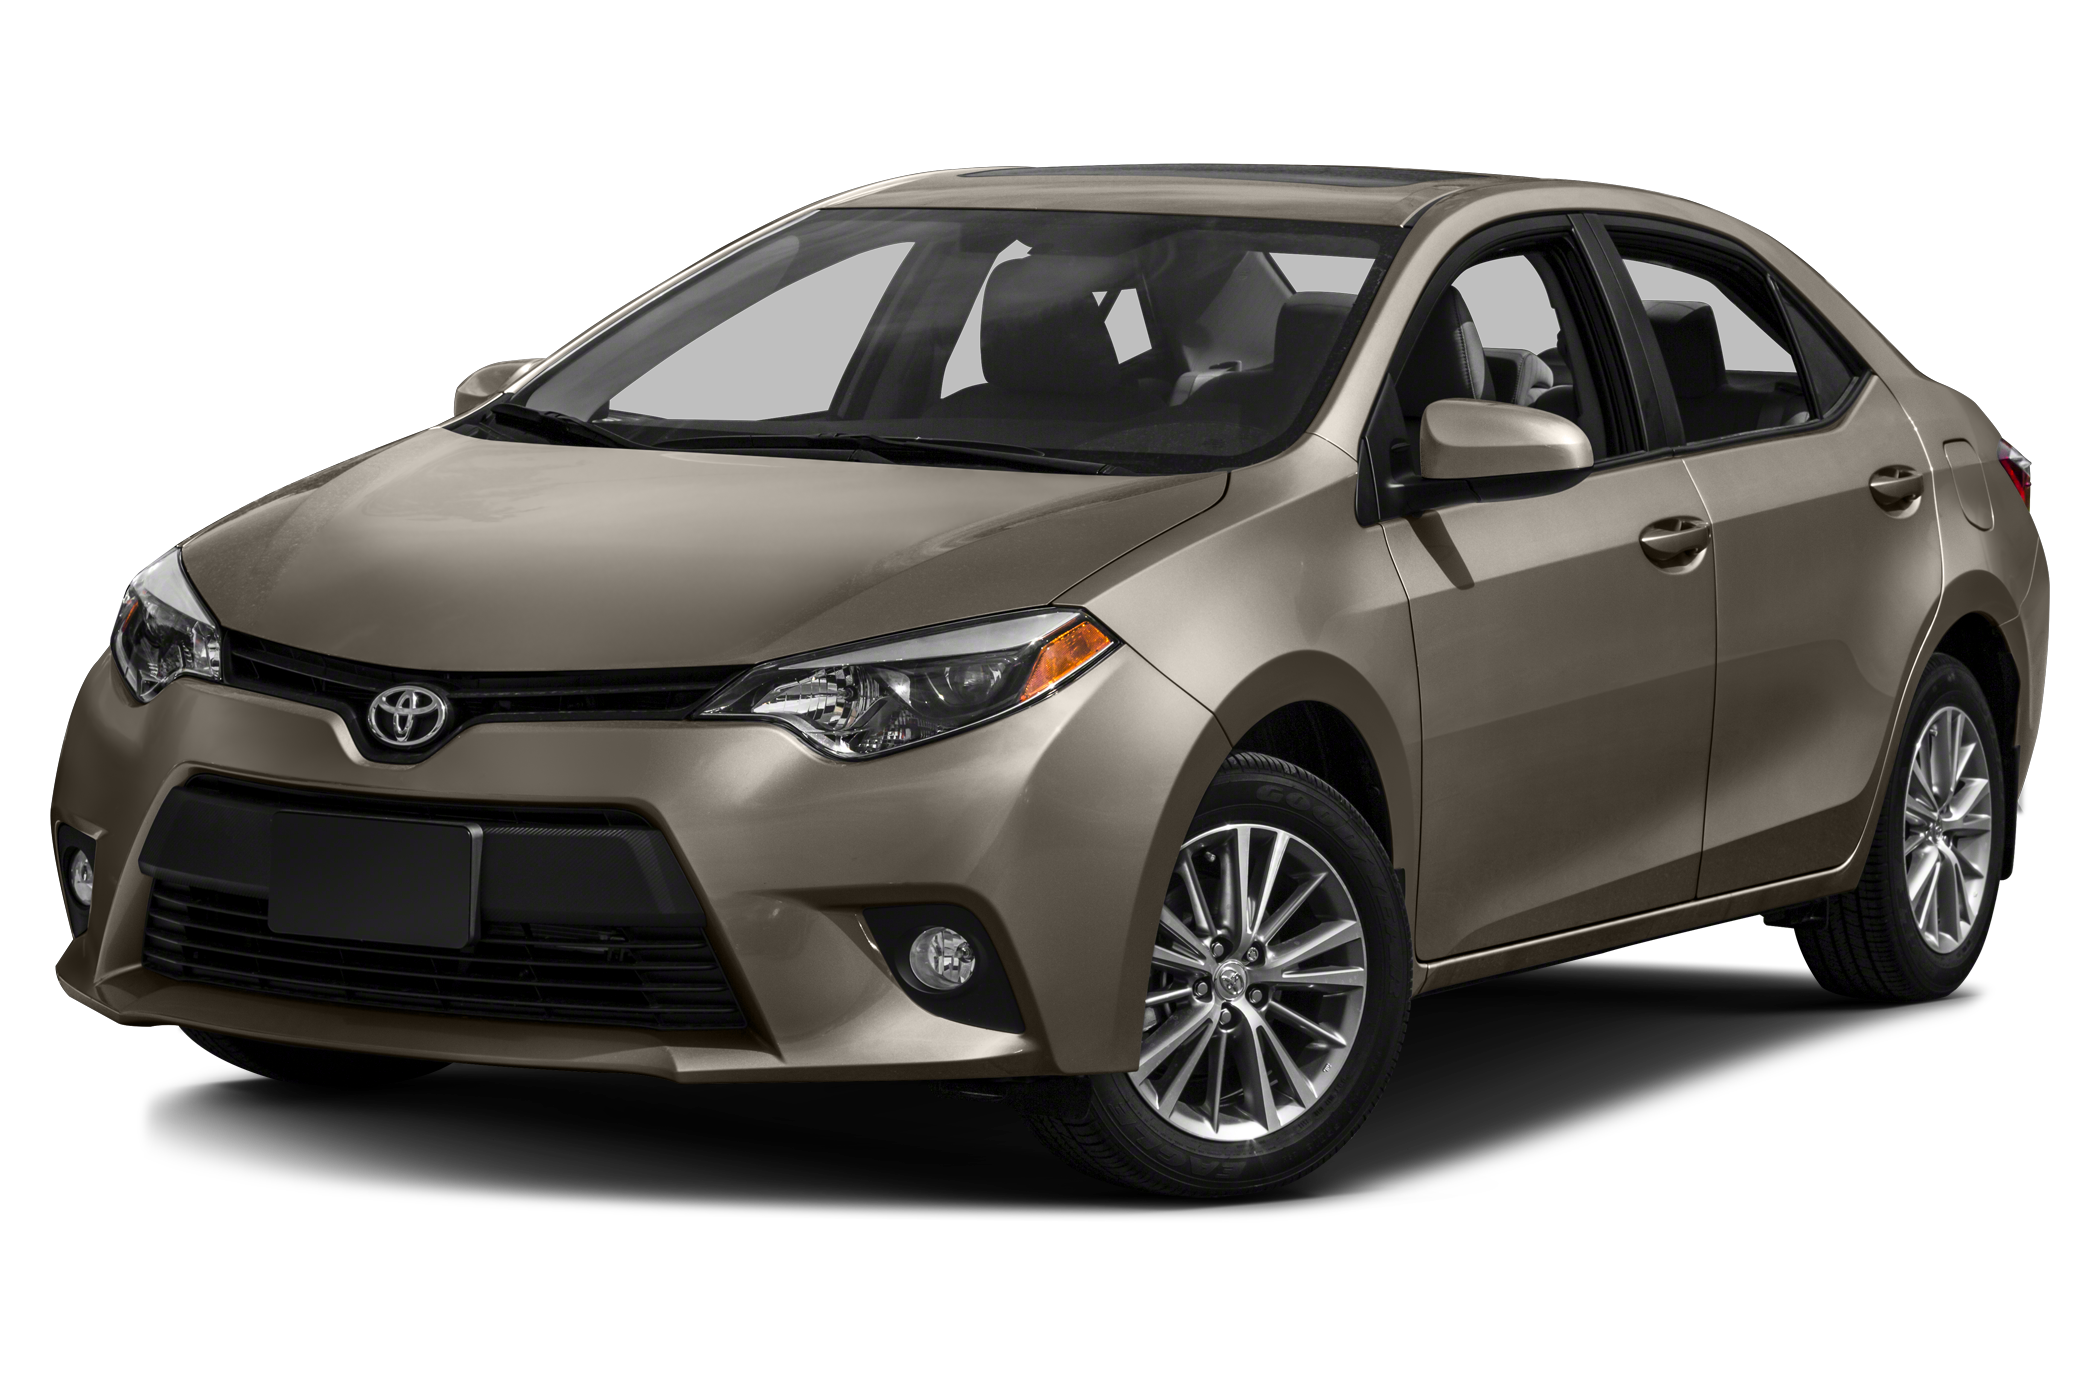 2016 Toyota Corolla View Specs, Prices & Photos WHEELS.ca